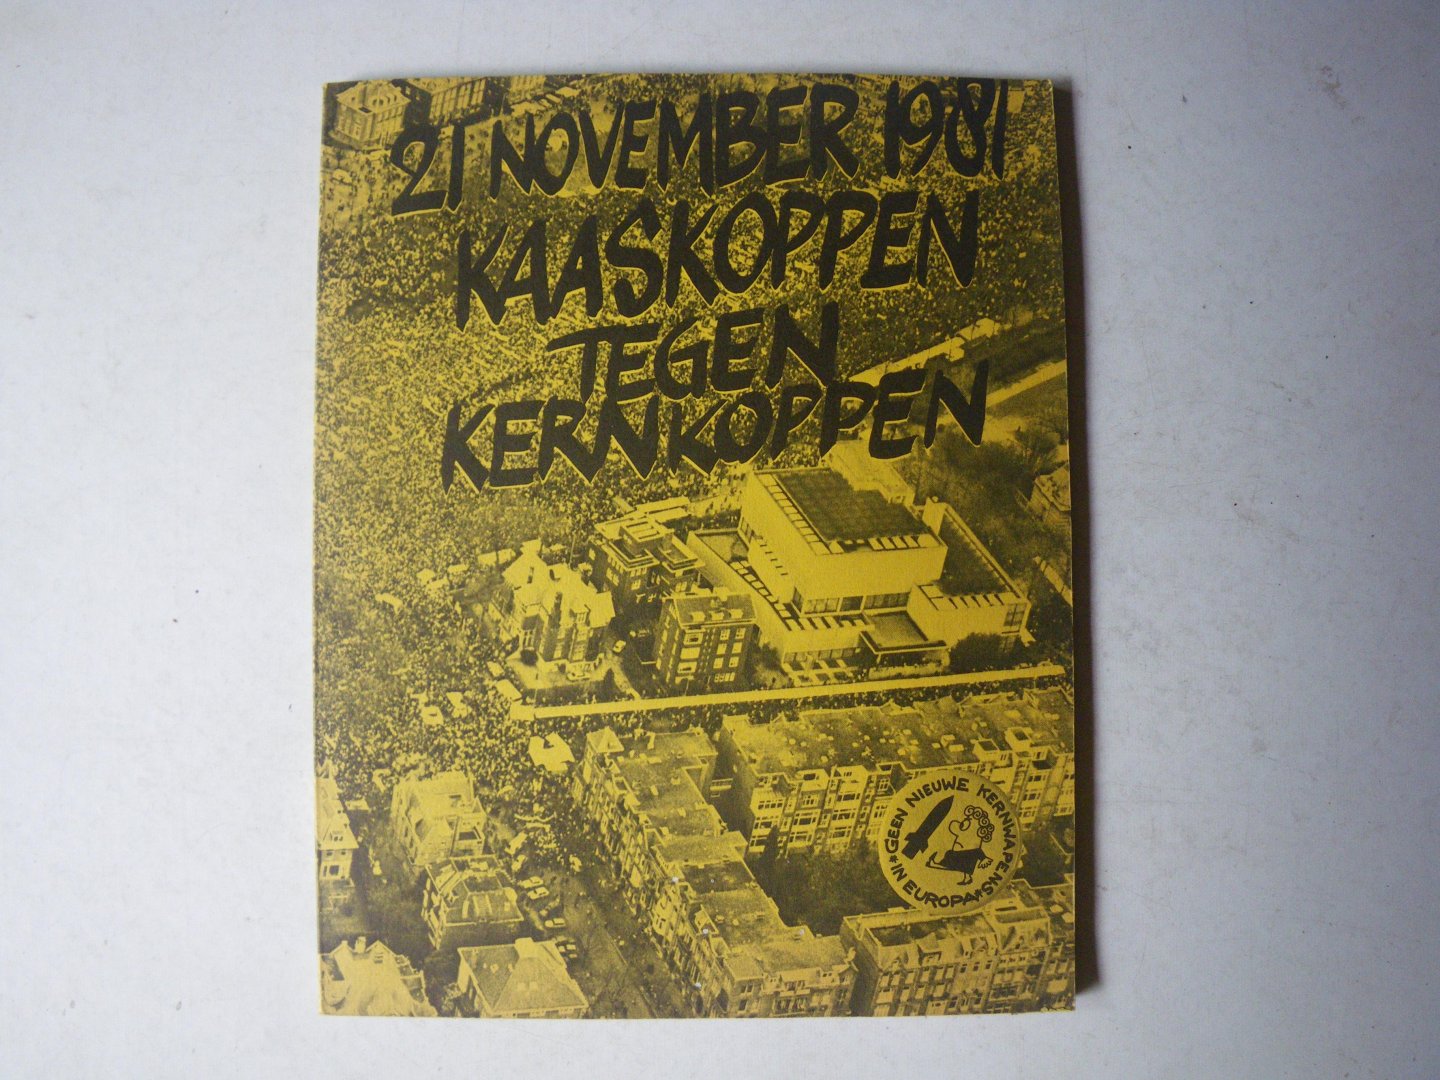 Velden Peter van der e.a. illustraties Groot Klaas, Greiner Frank e.a. - 21 november 1981 kaaskoppen tegen kernkoppen